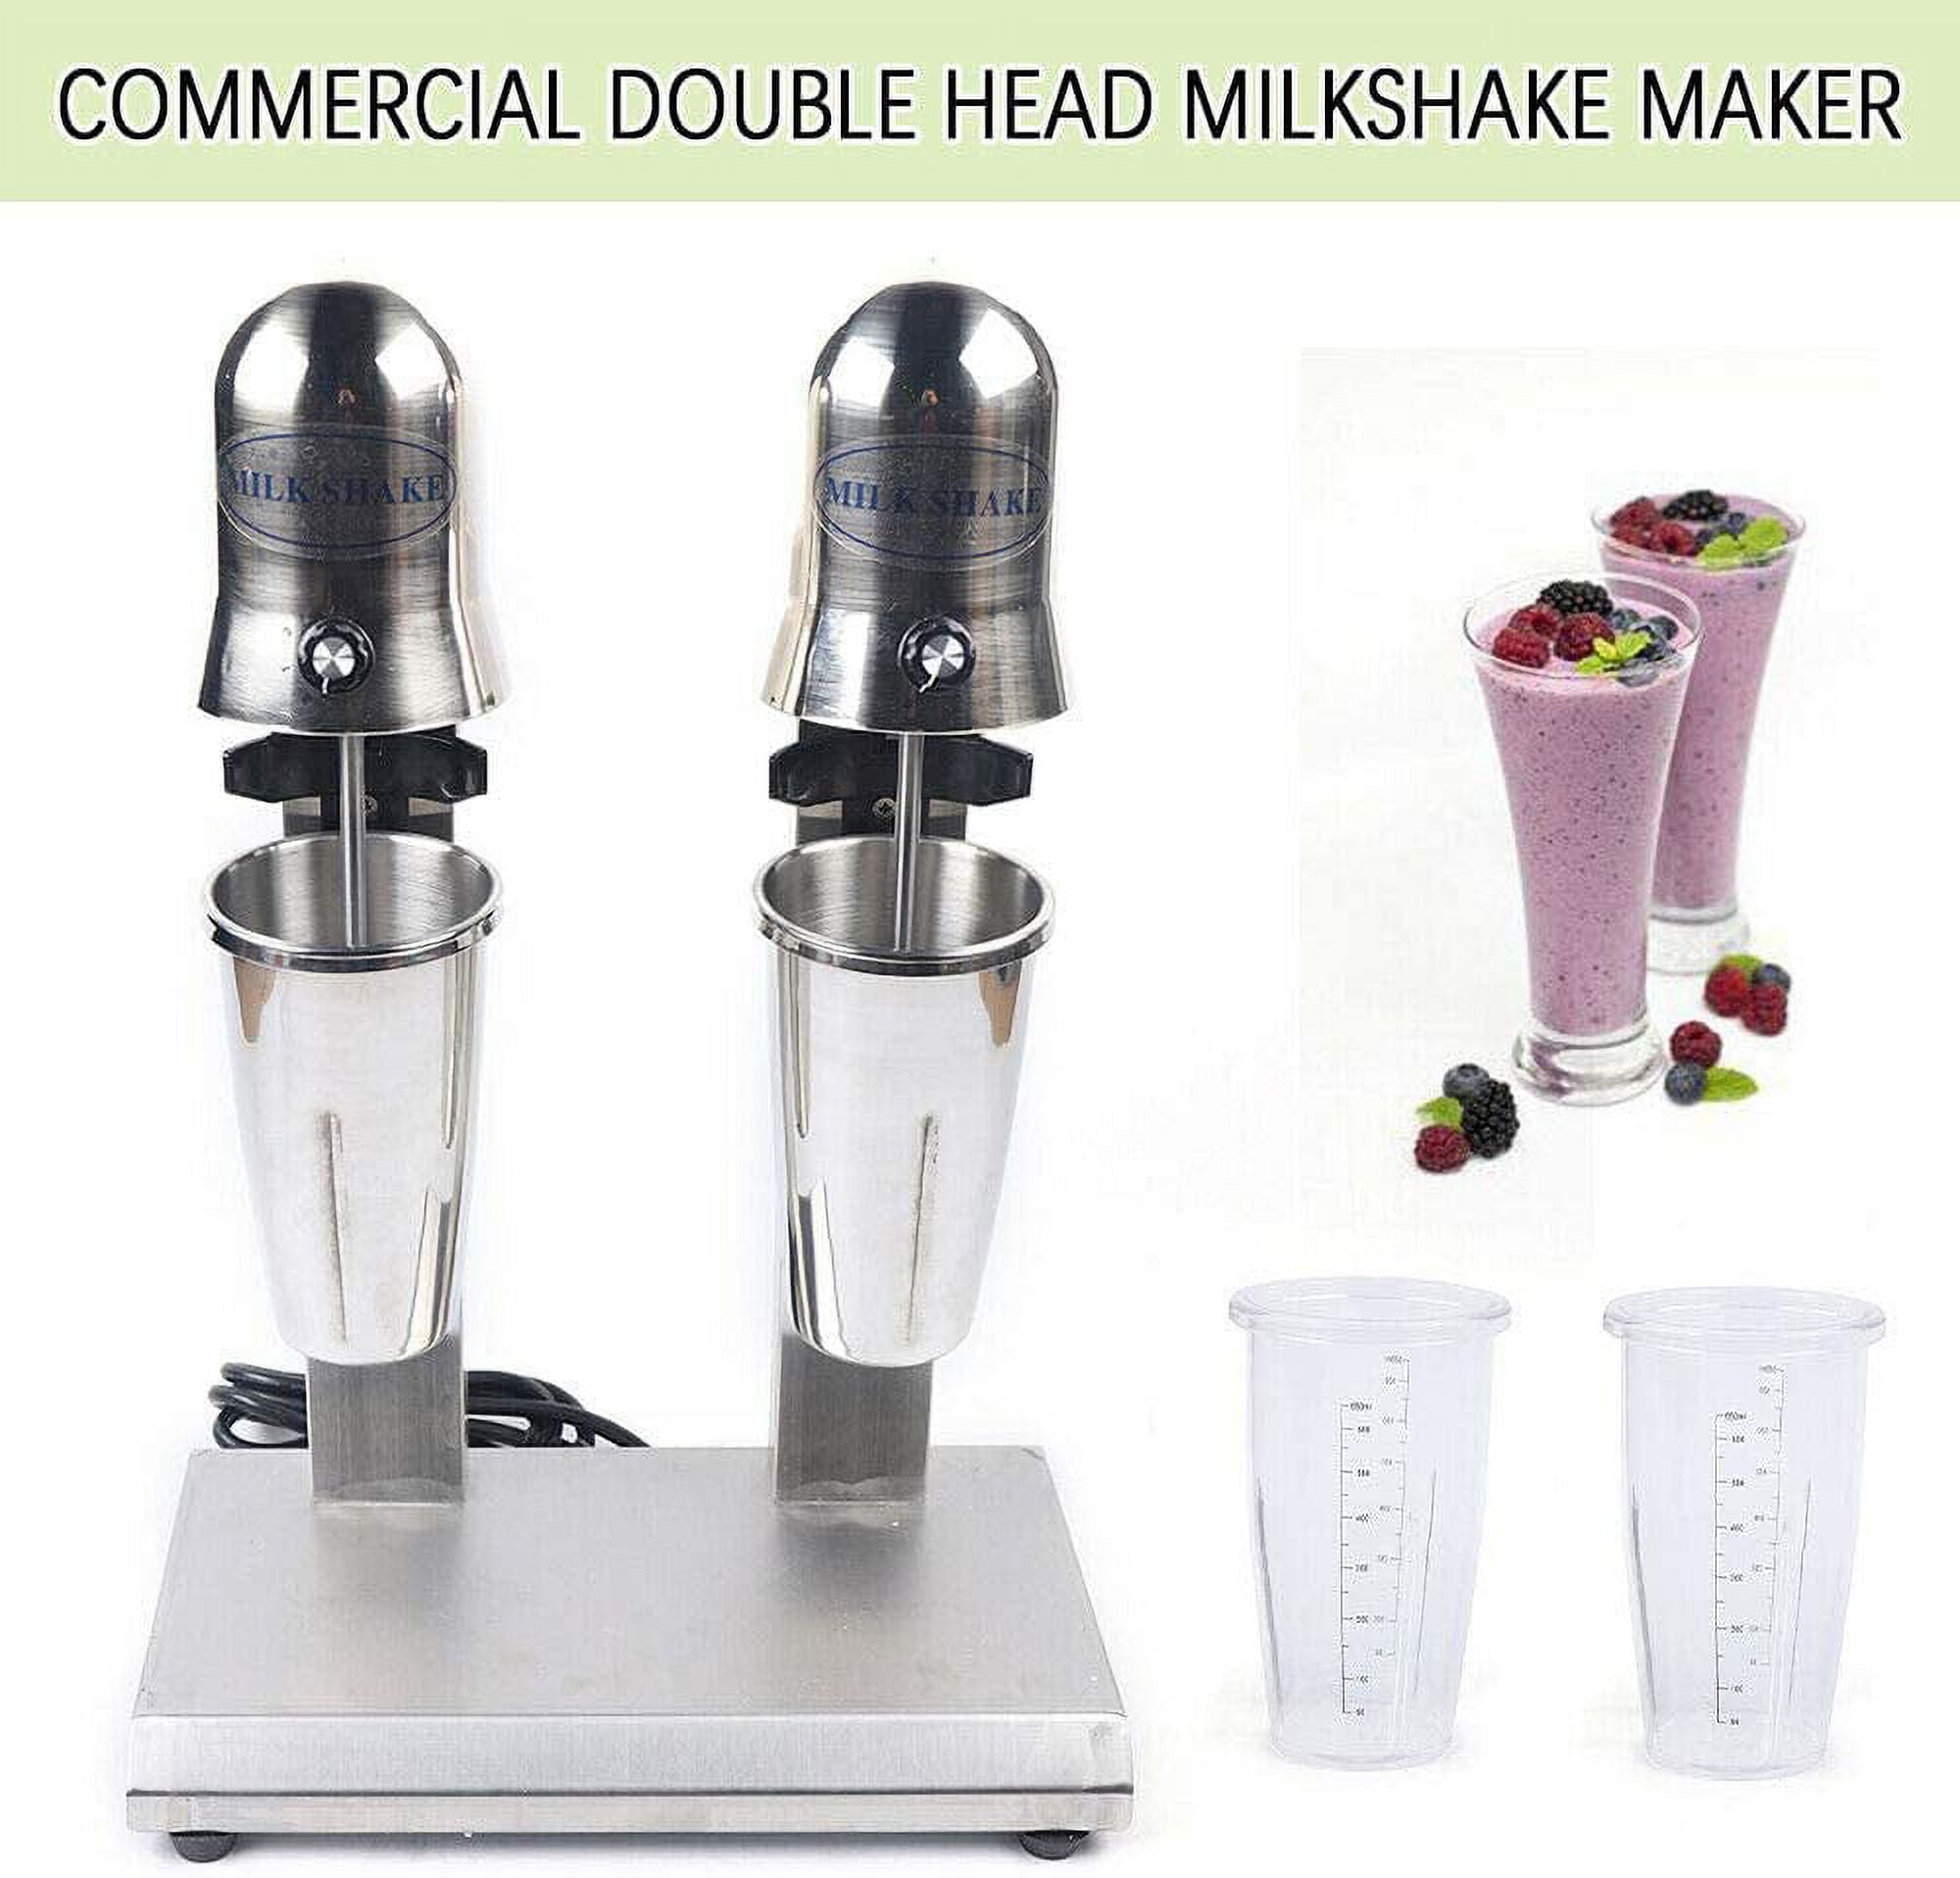 CMV: Milkshake makers are worse than regular blenders and have no